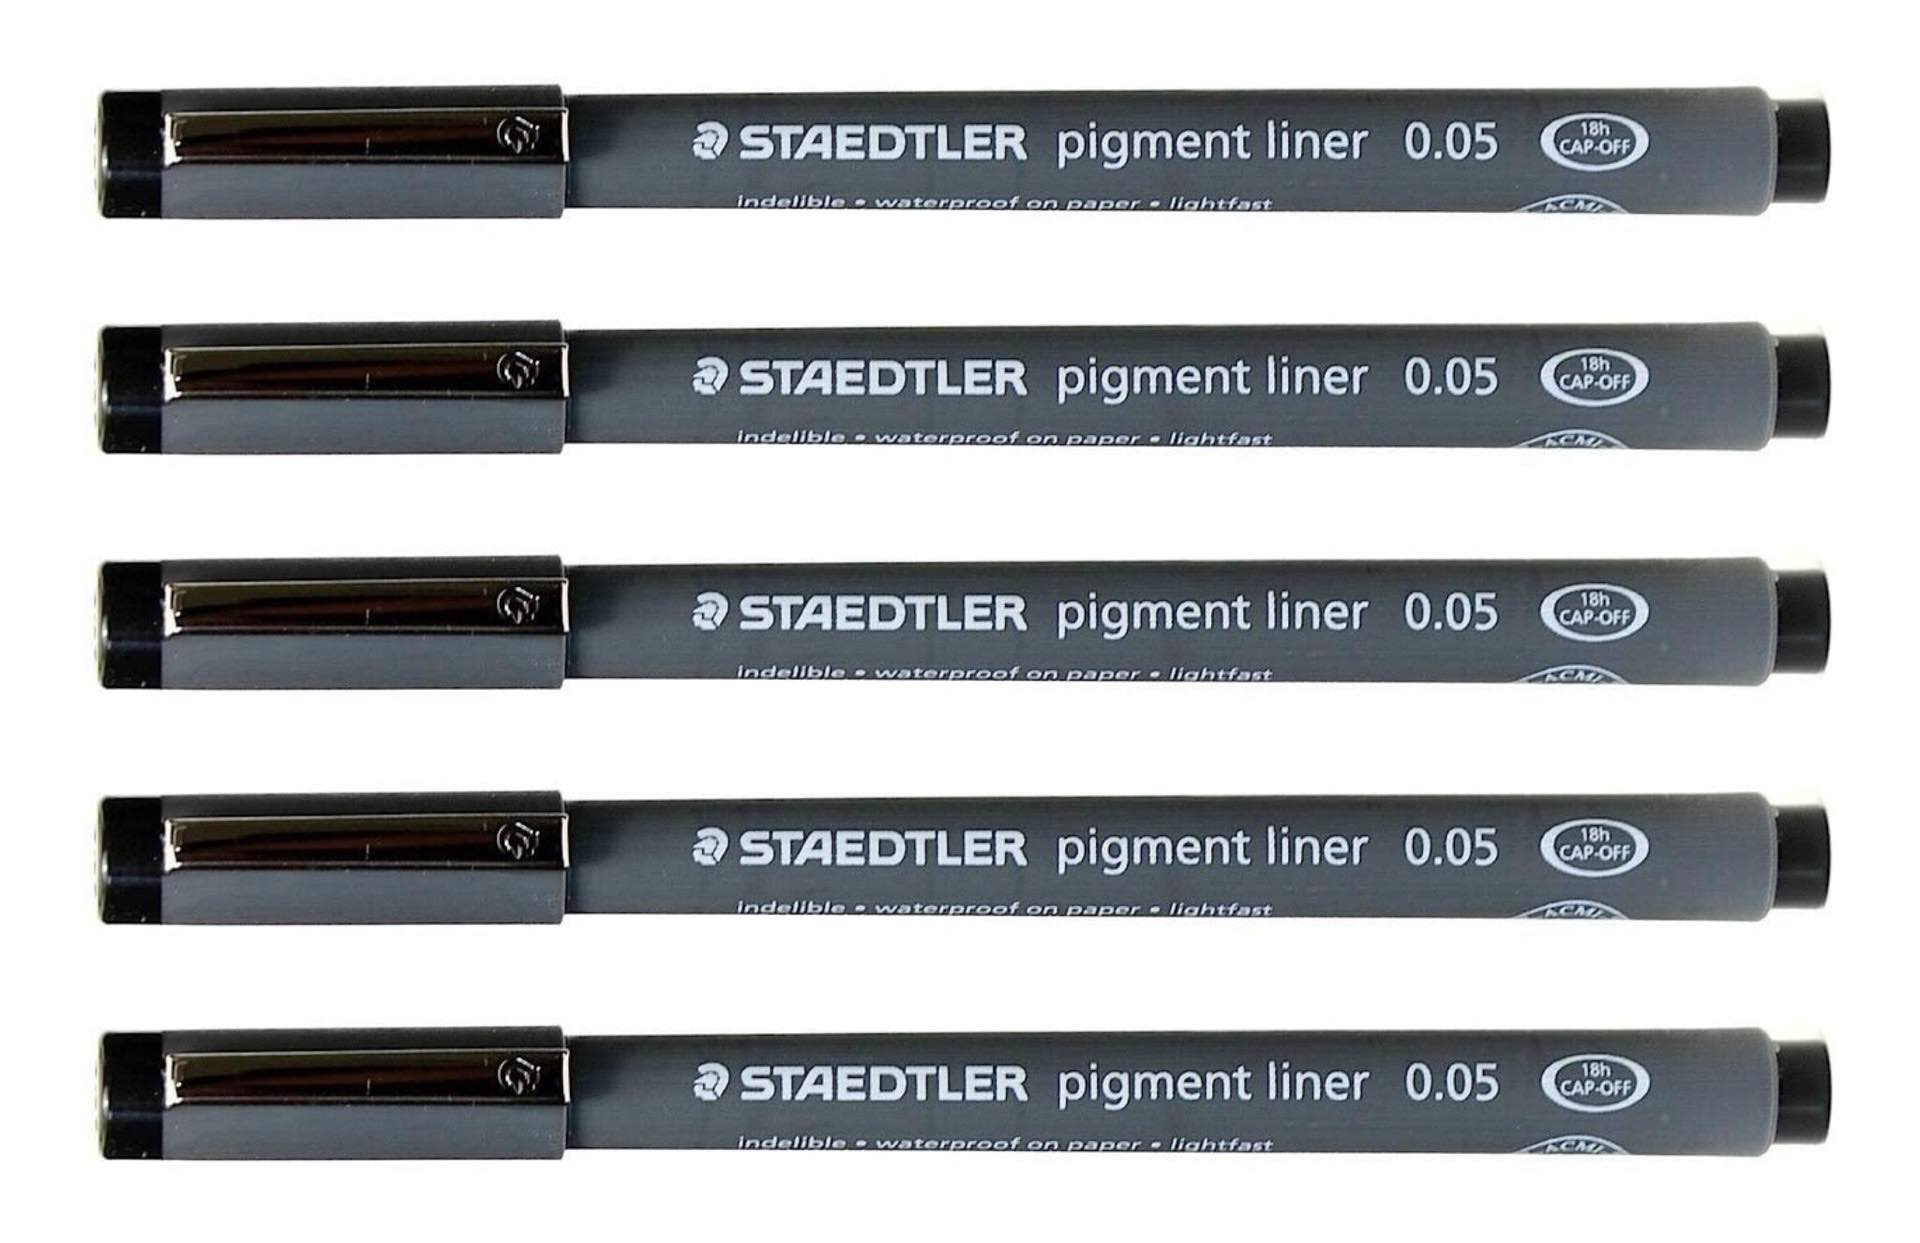 Staedtler 0.05mm Pigment Liner Pens